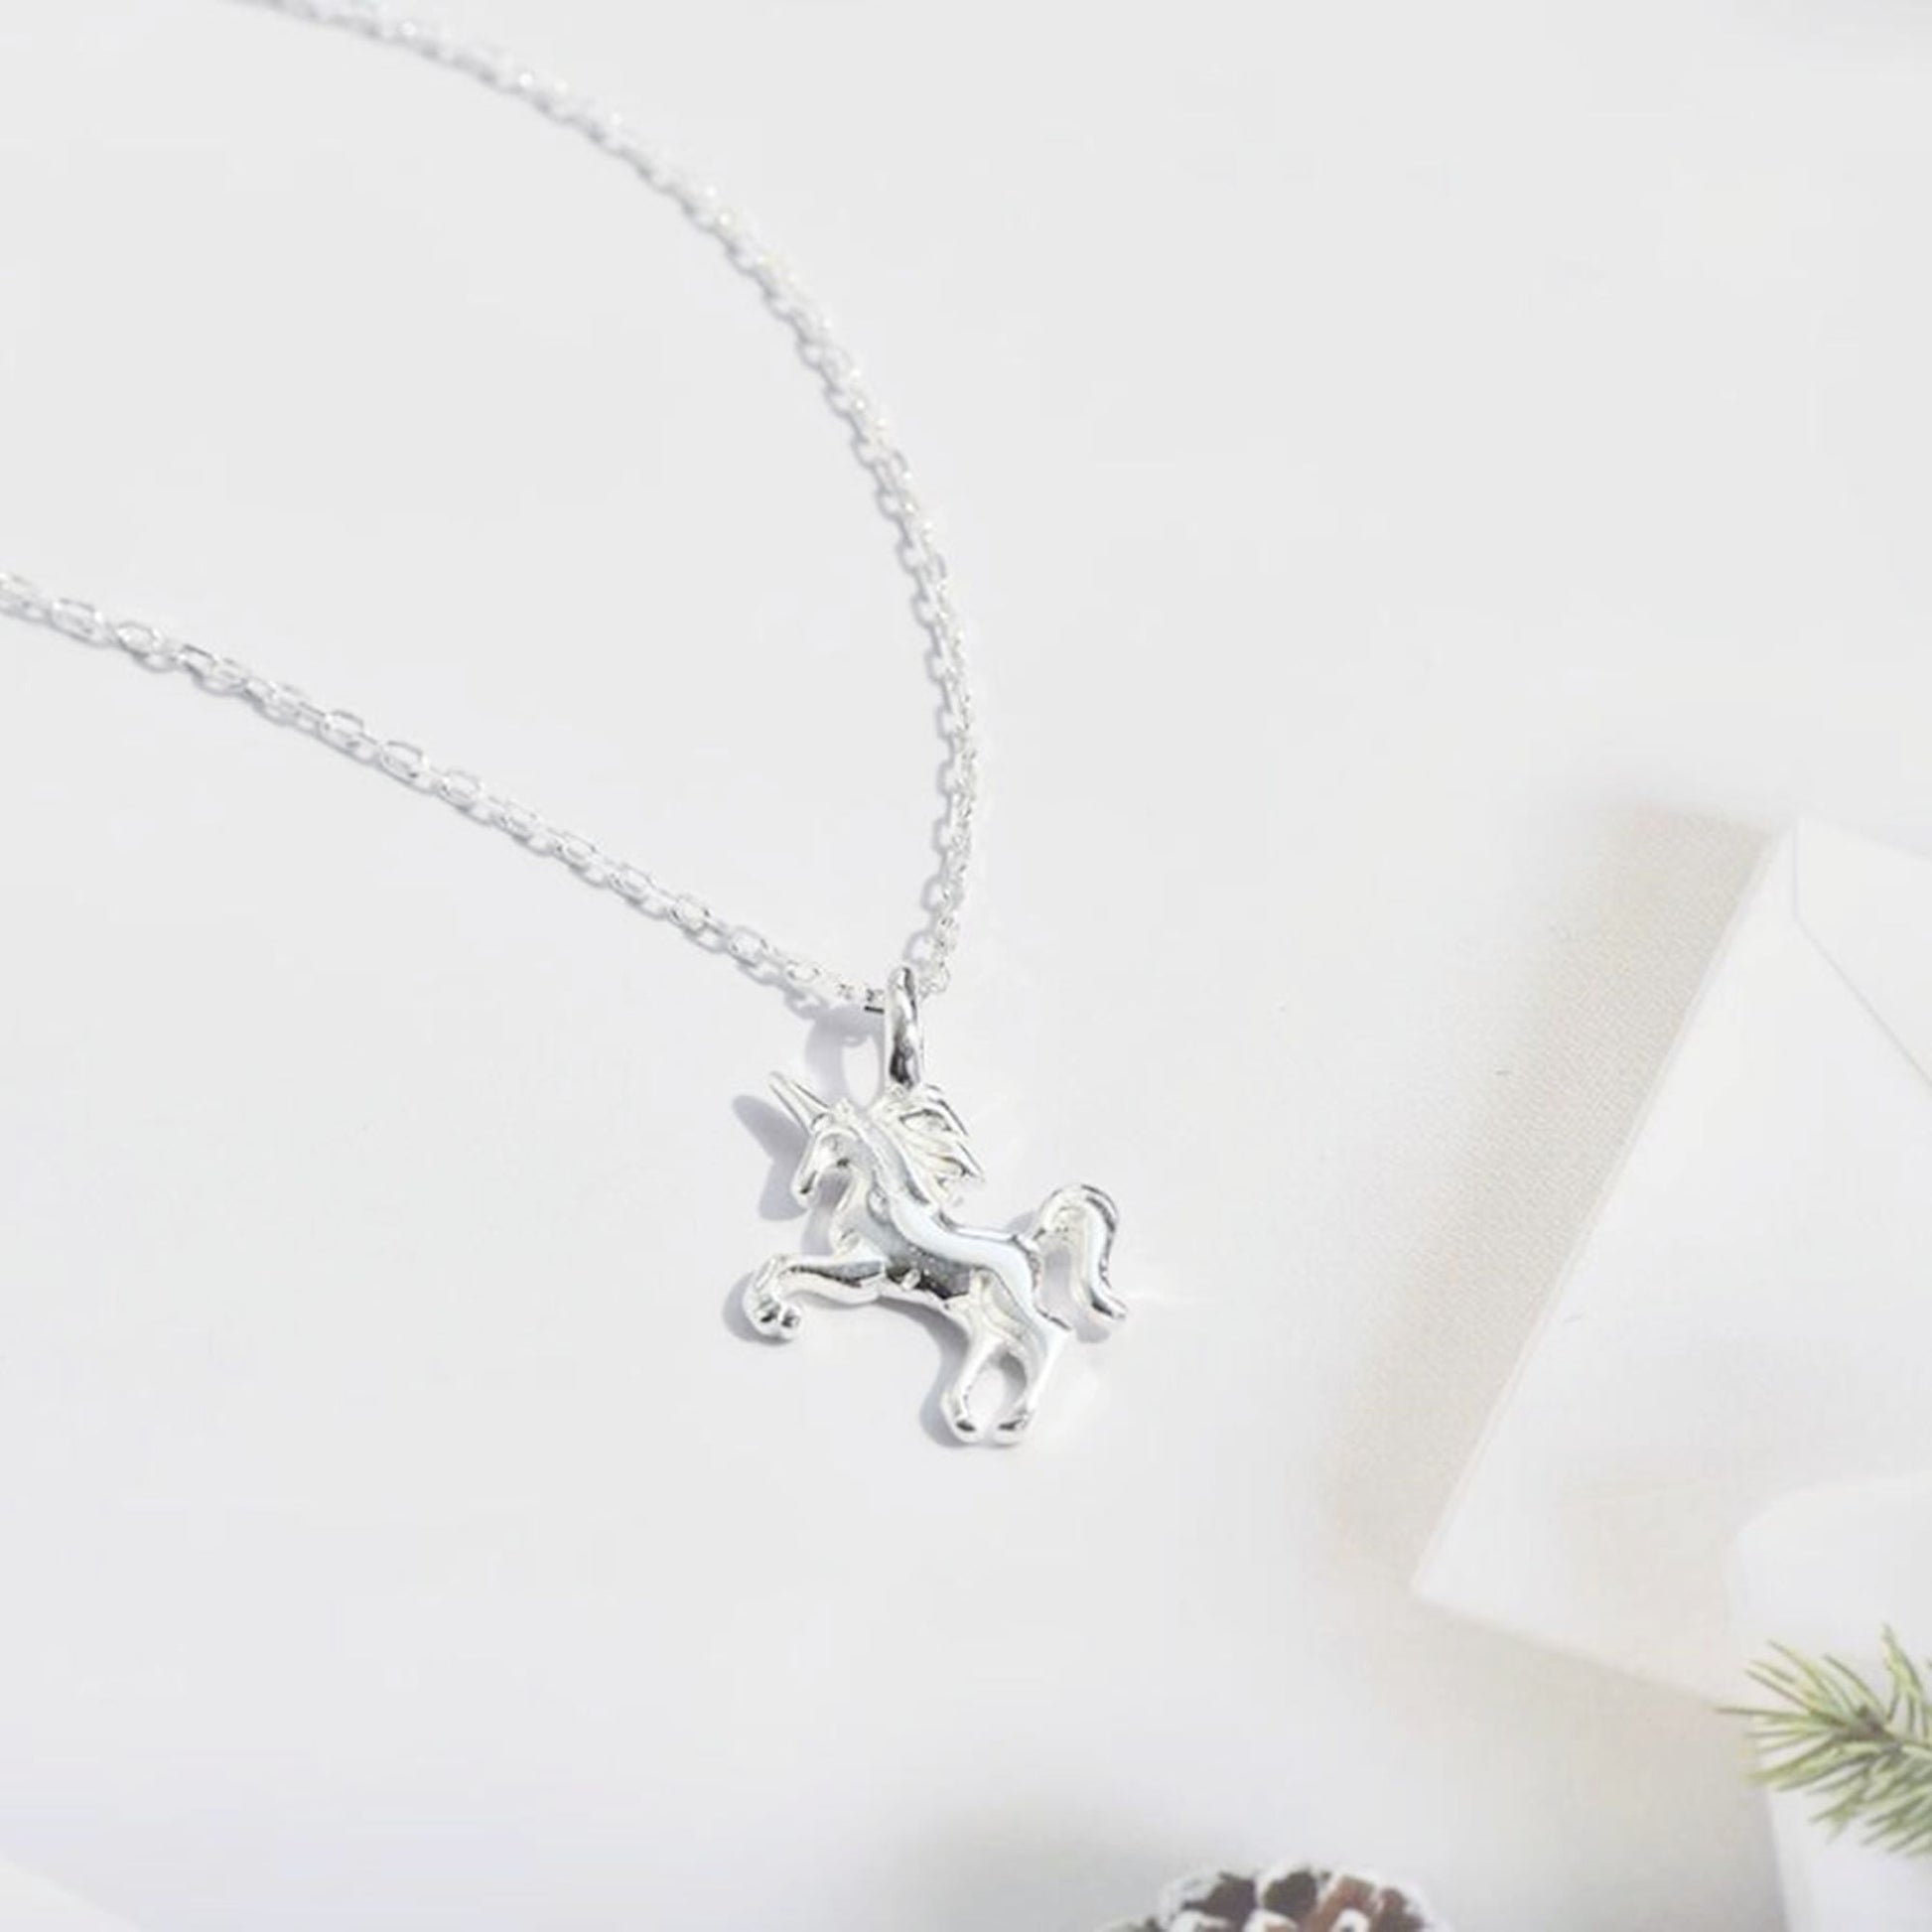 Sparkling Sterling Silver Unicorn Necklace with Belcher Chain - sugarkittenlondon